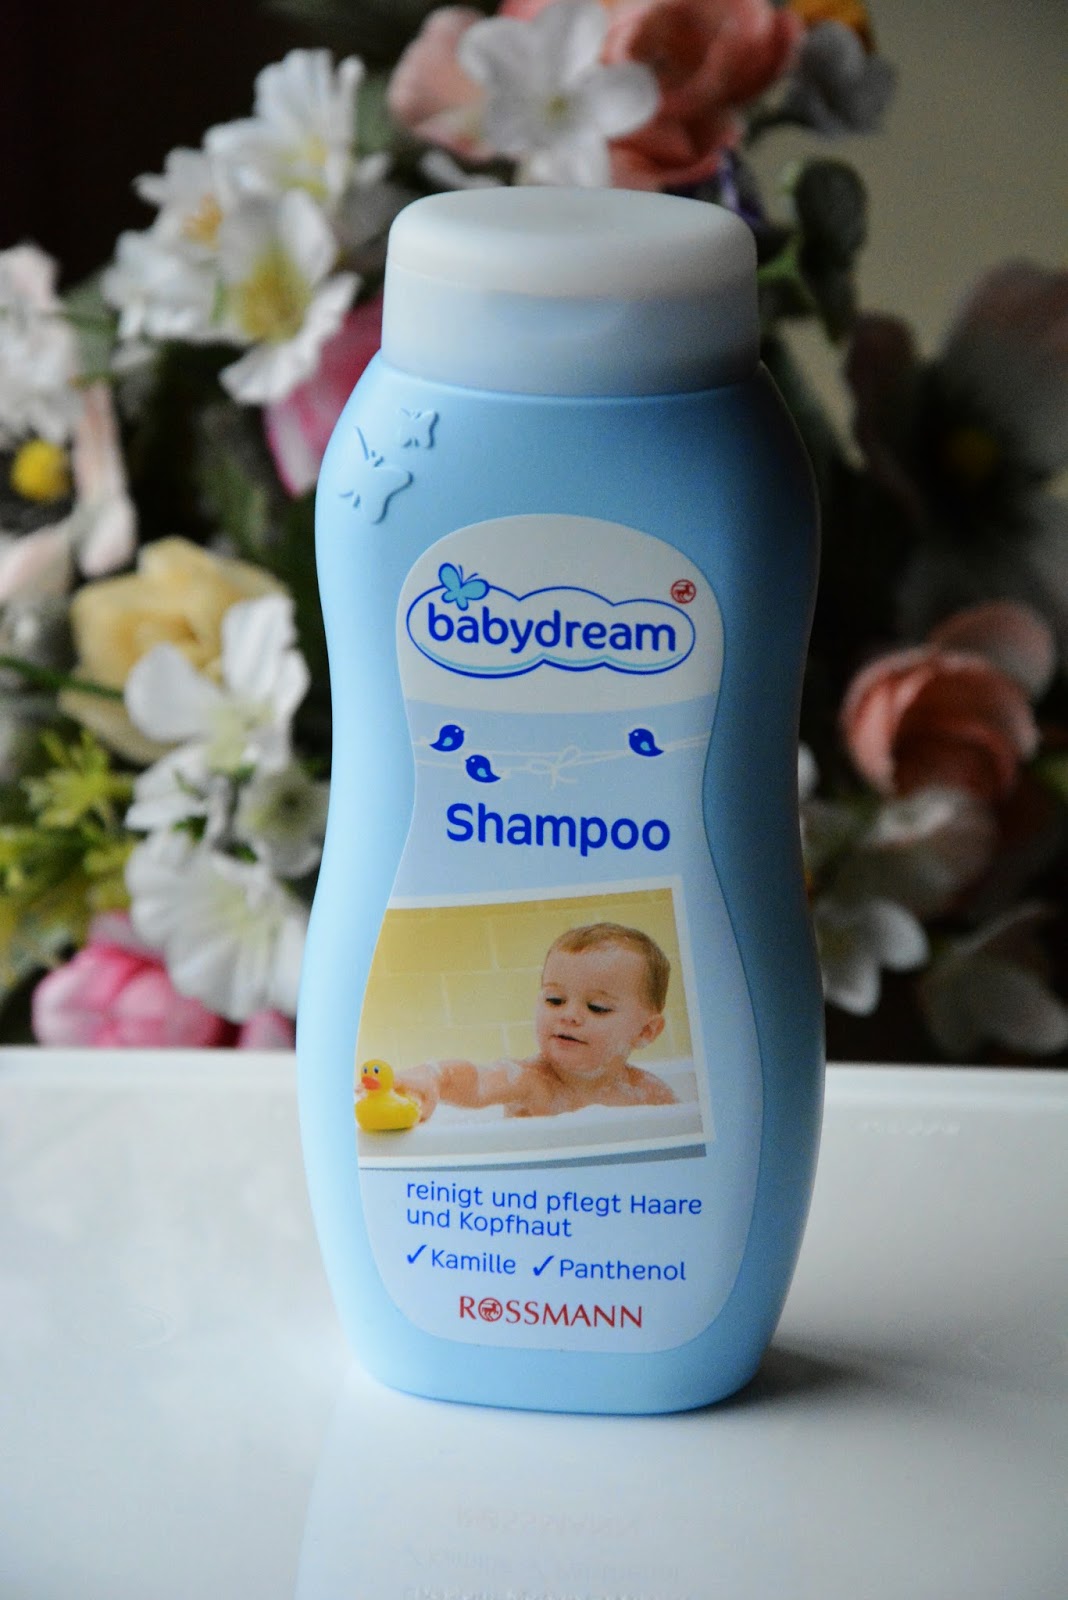 szampon babydream opinie